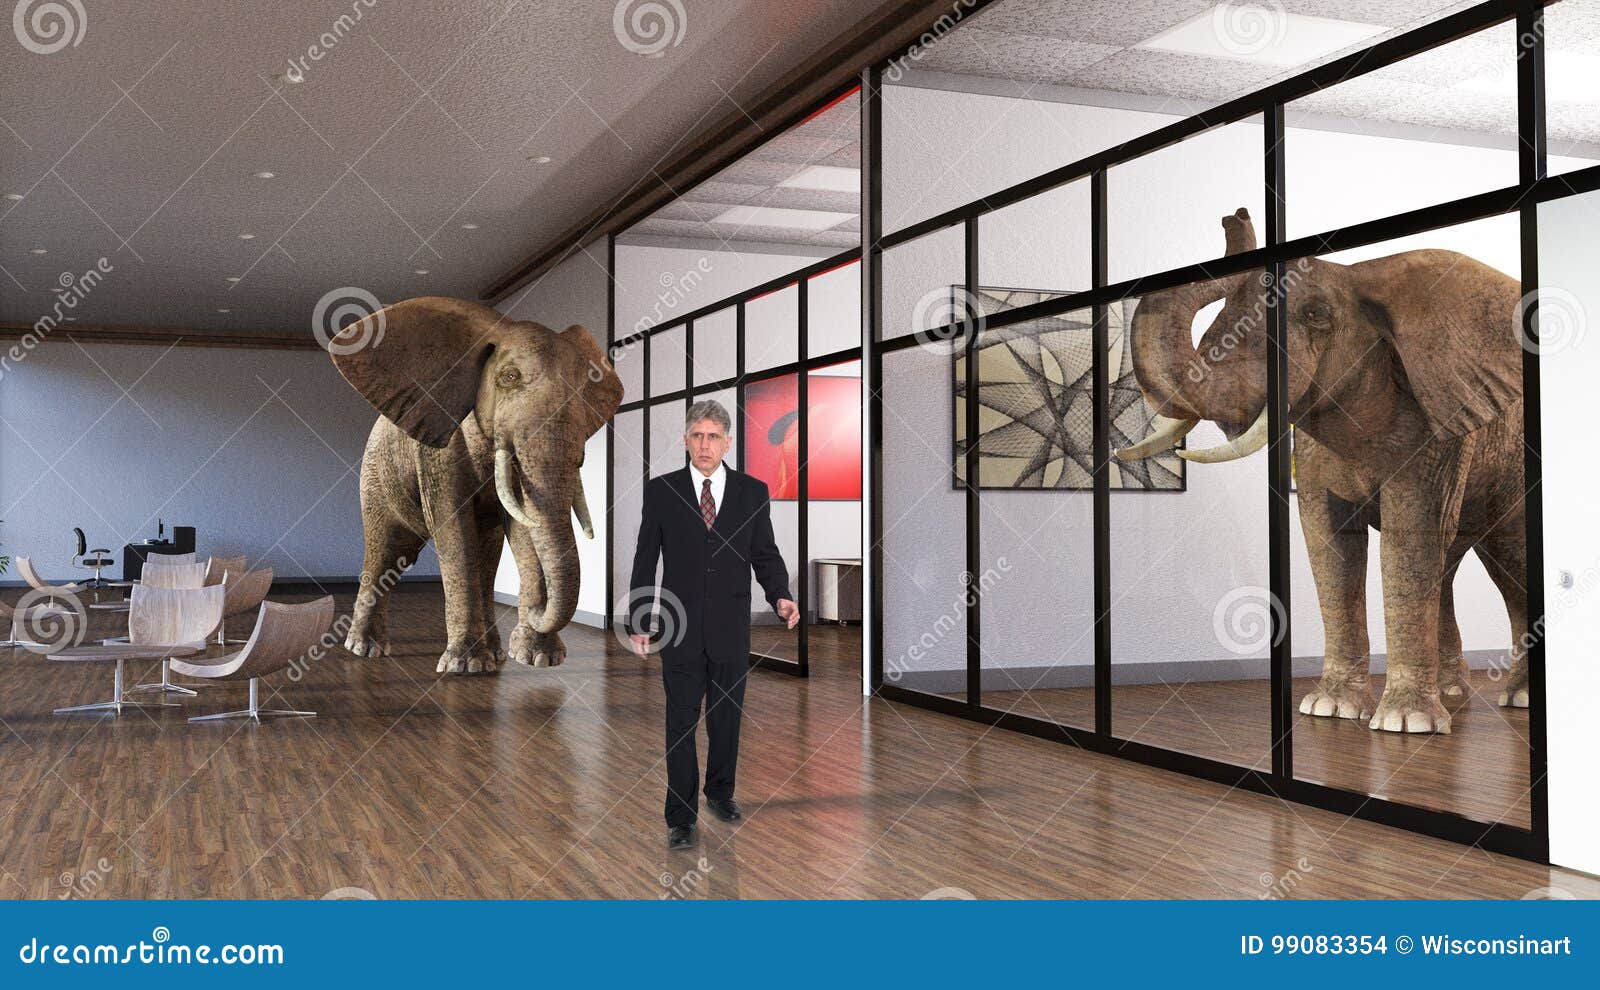 business office, sales, marketing, elephants